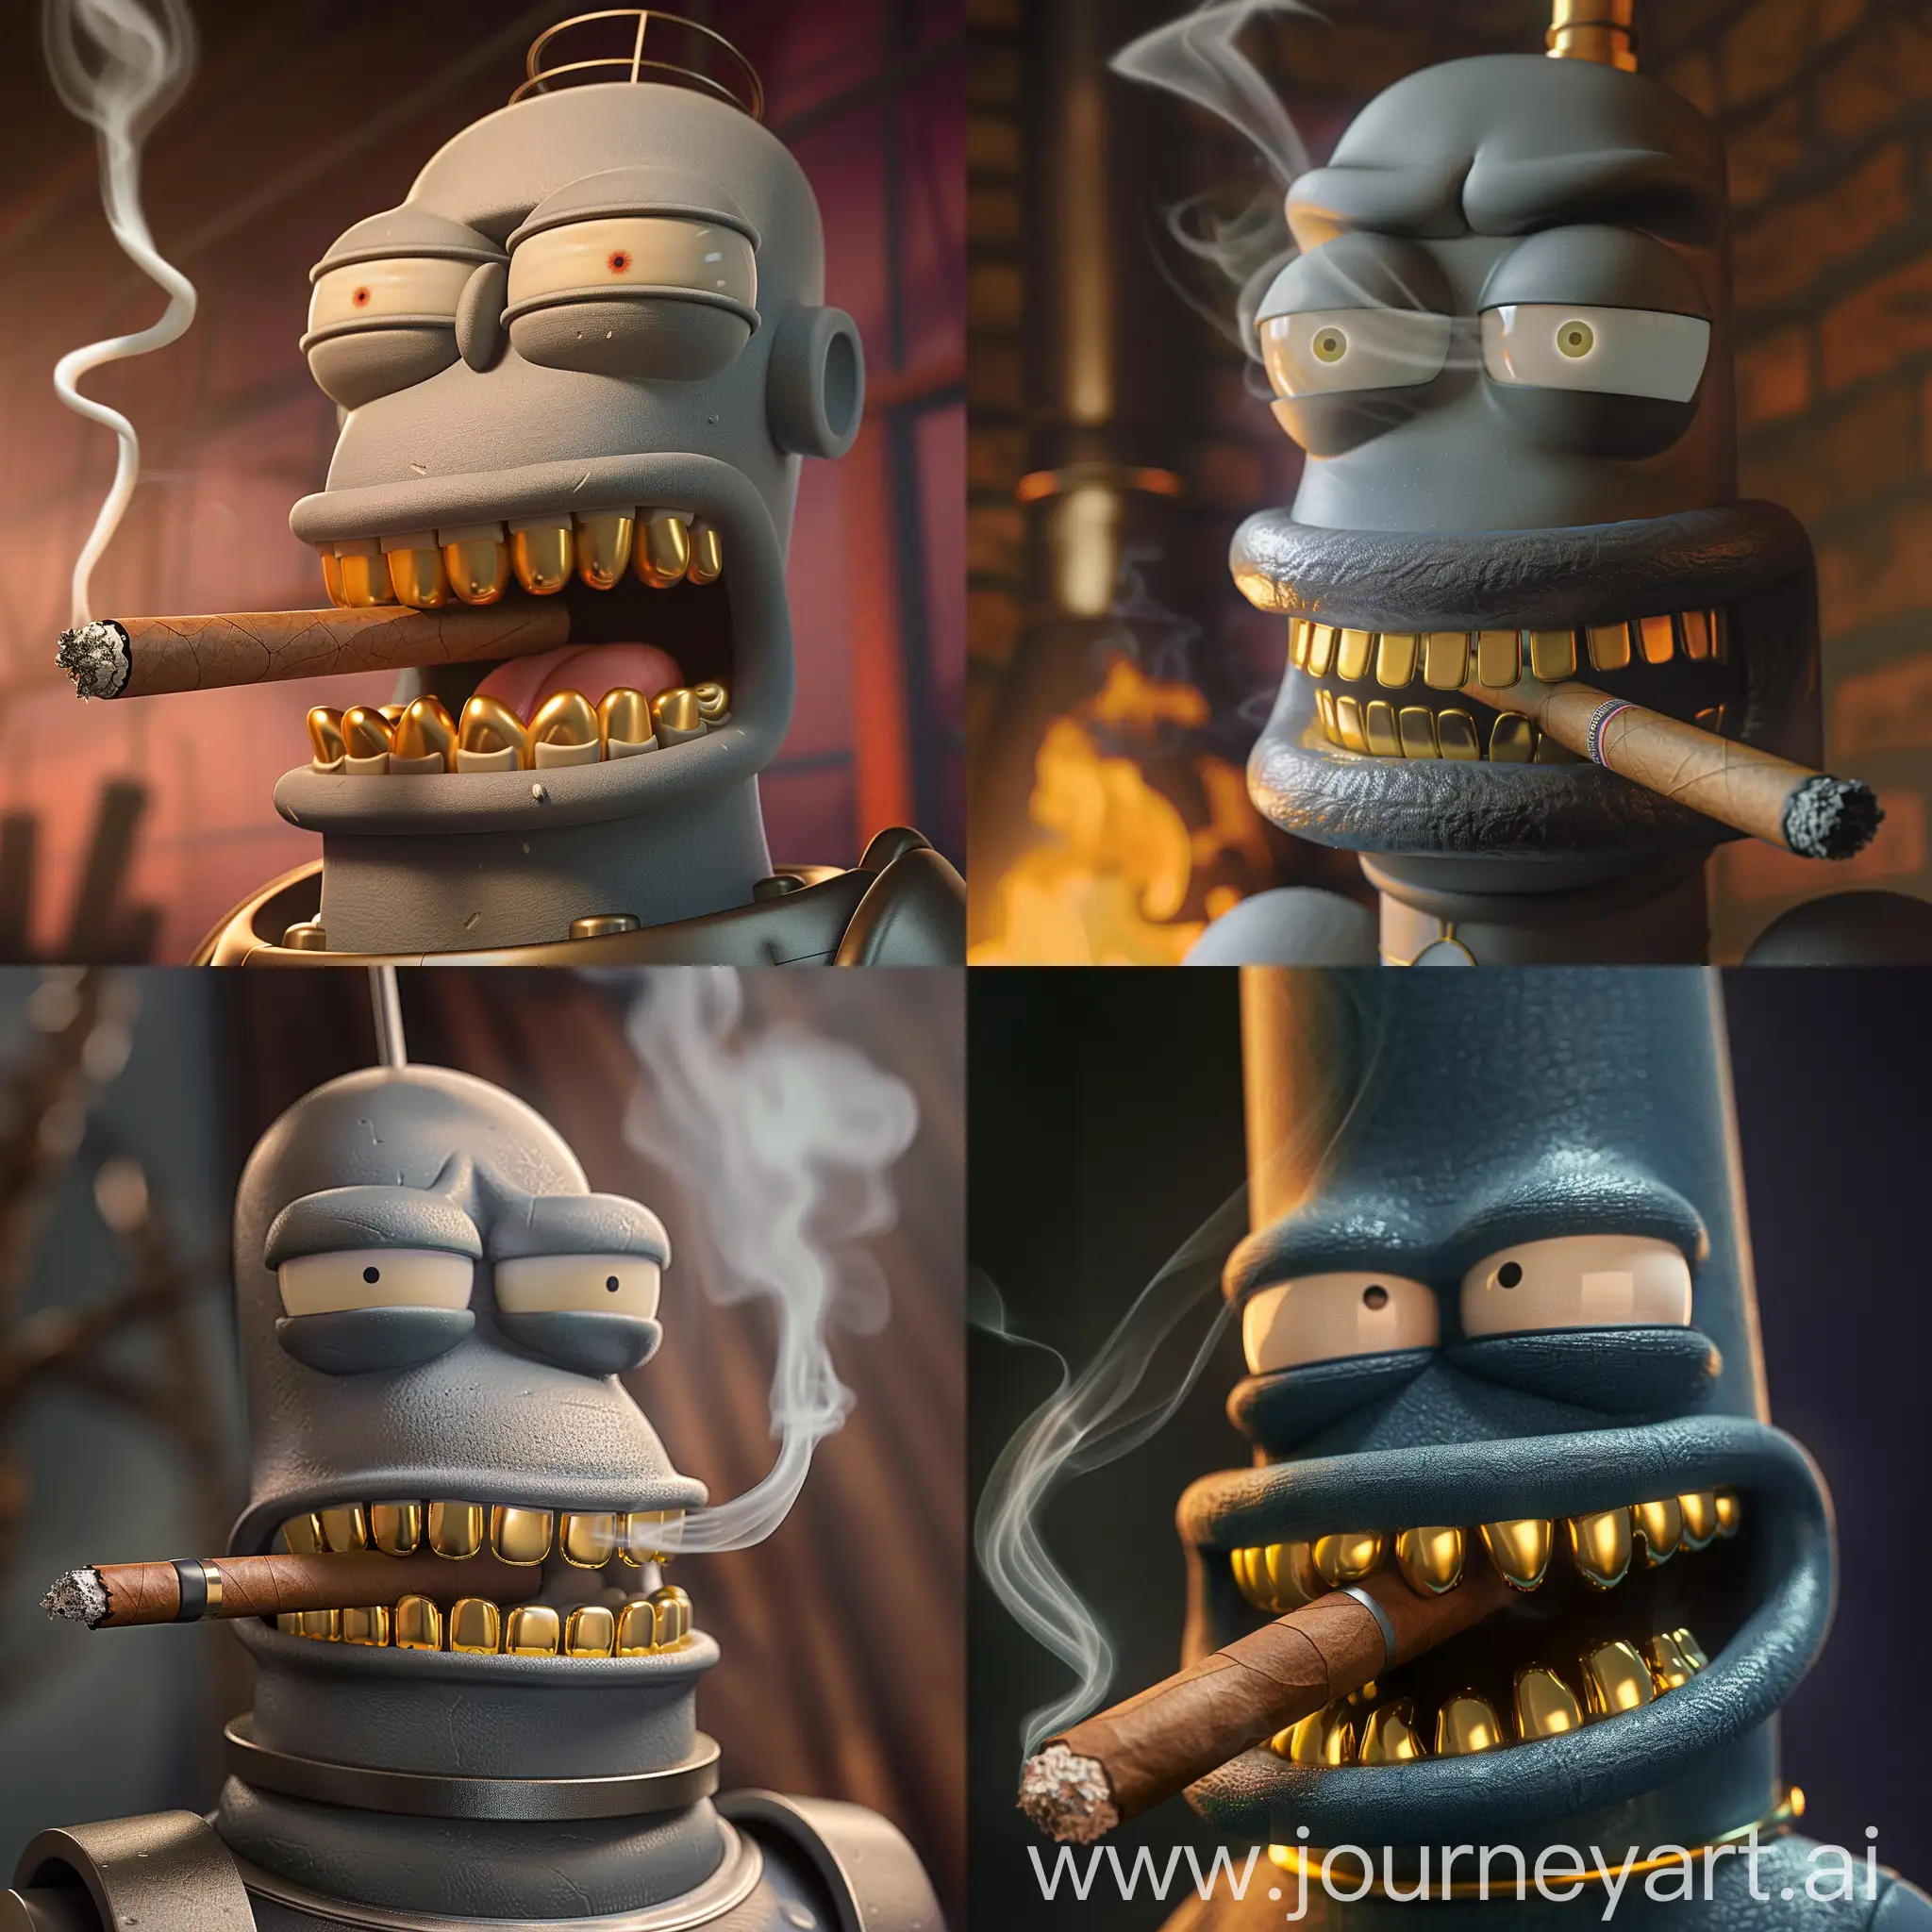 Futuramas-Bender-with-Gold-Teeth-Smoking-a-Cigar